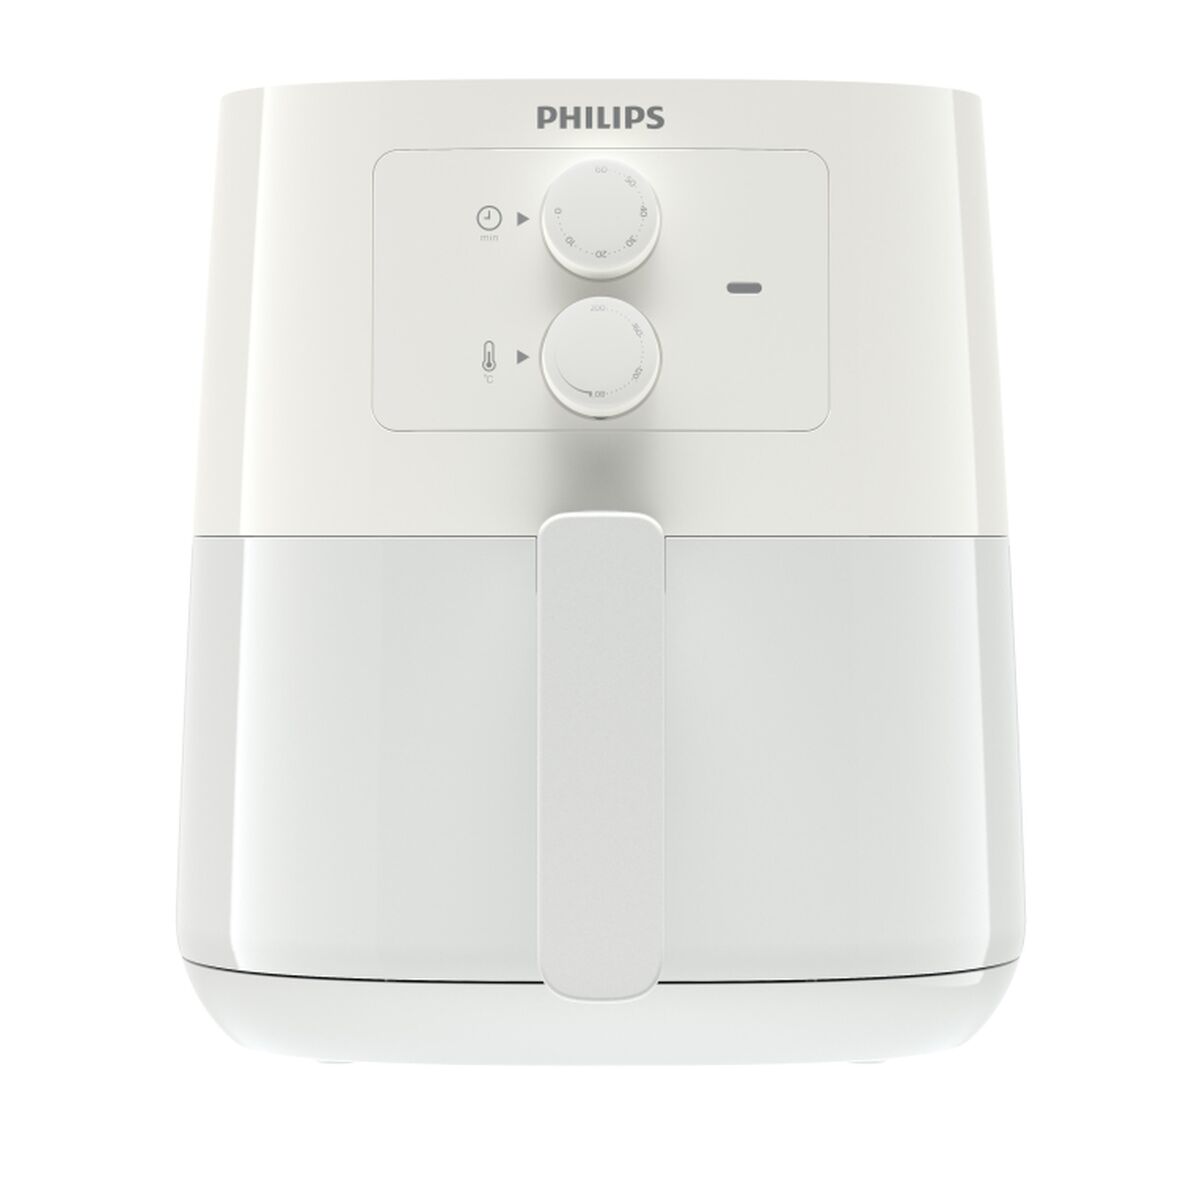 No-Oil Fryer Philips HD9200/10 White White/Grey 1400 W